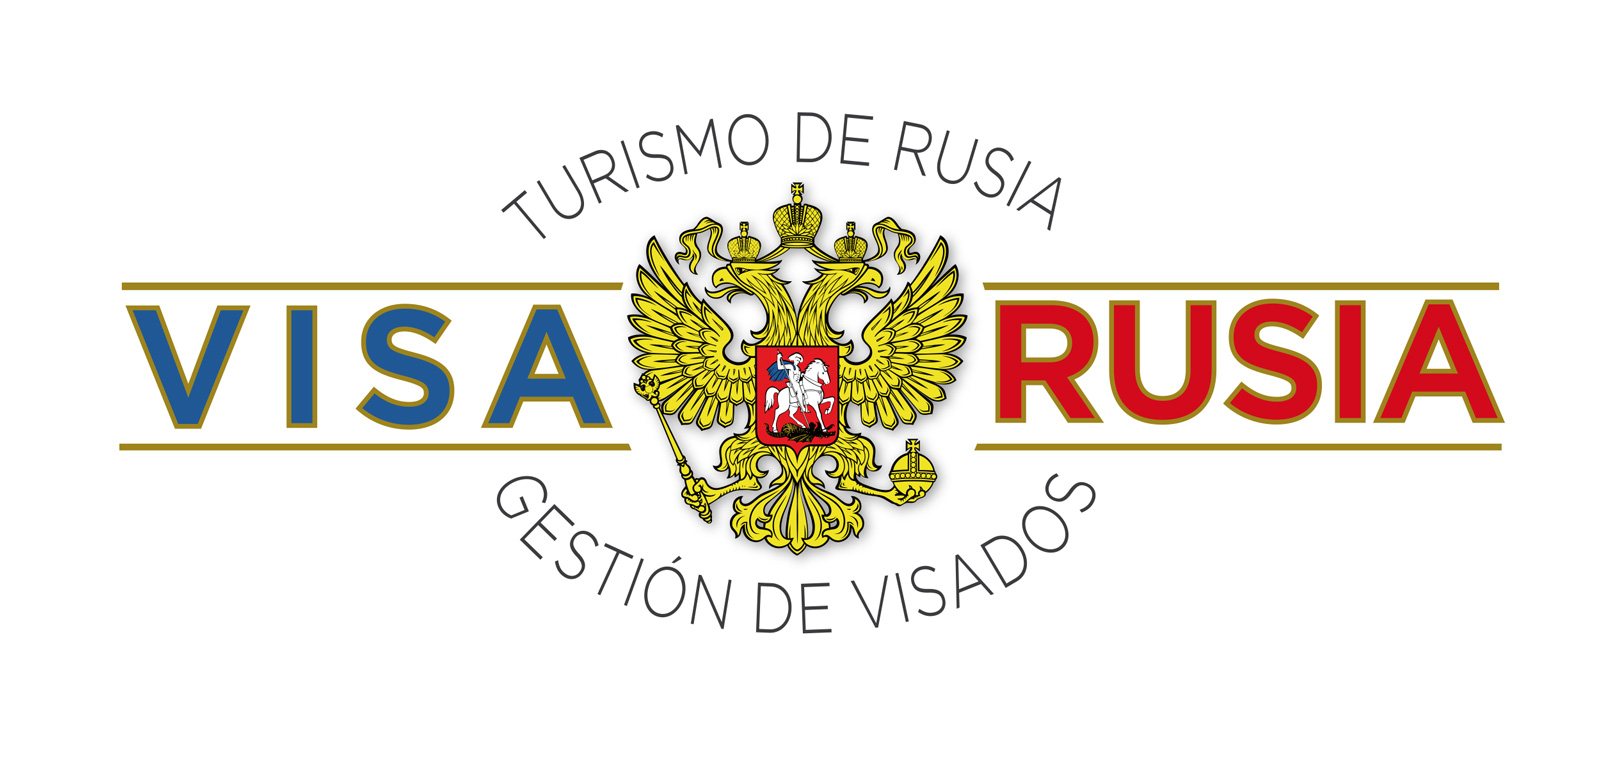 Portfolio of logo and brand design design work for travel agency for the sale of Russian visas